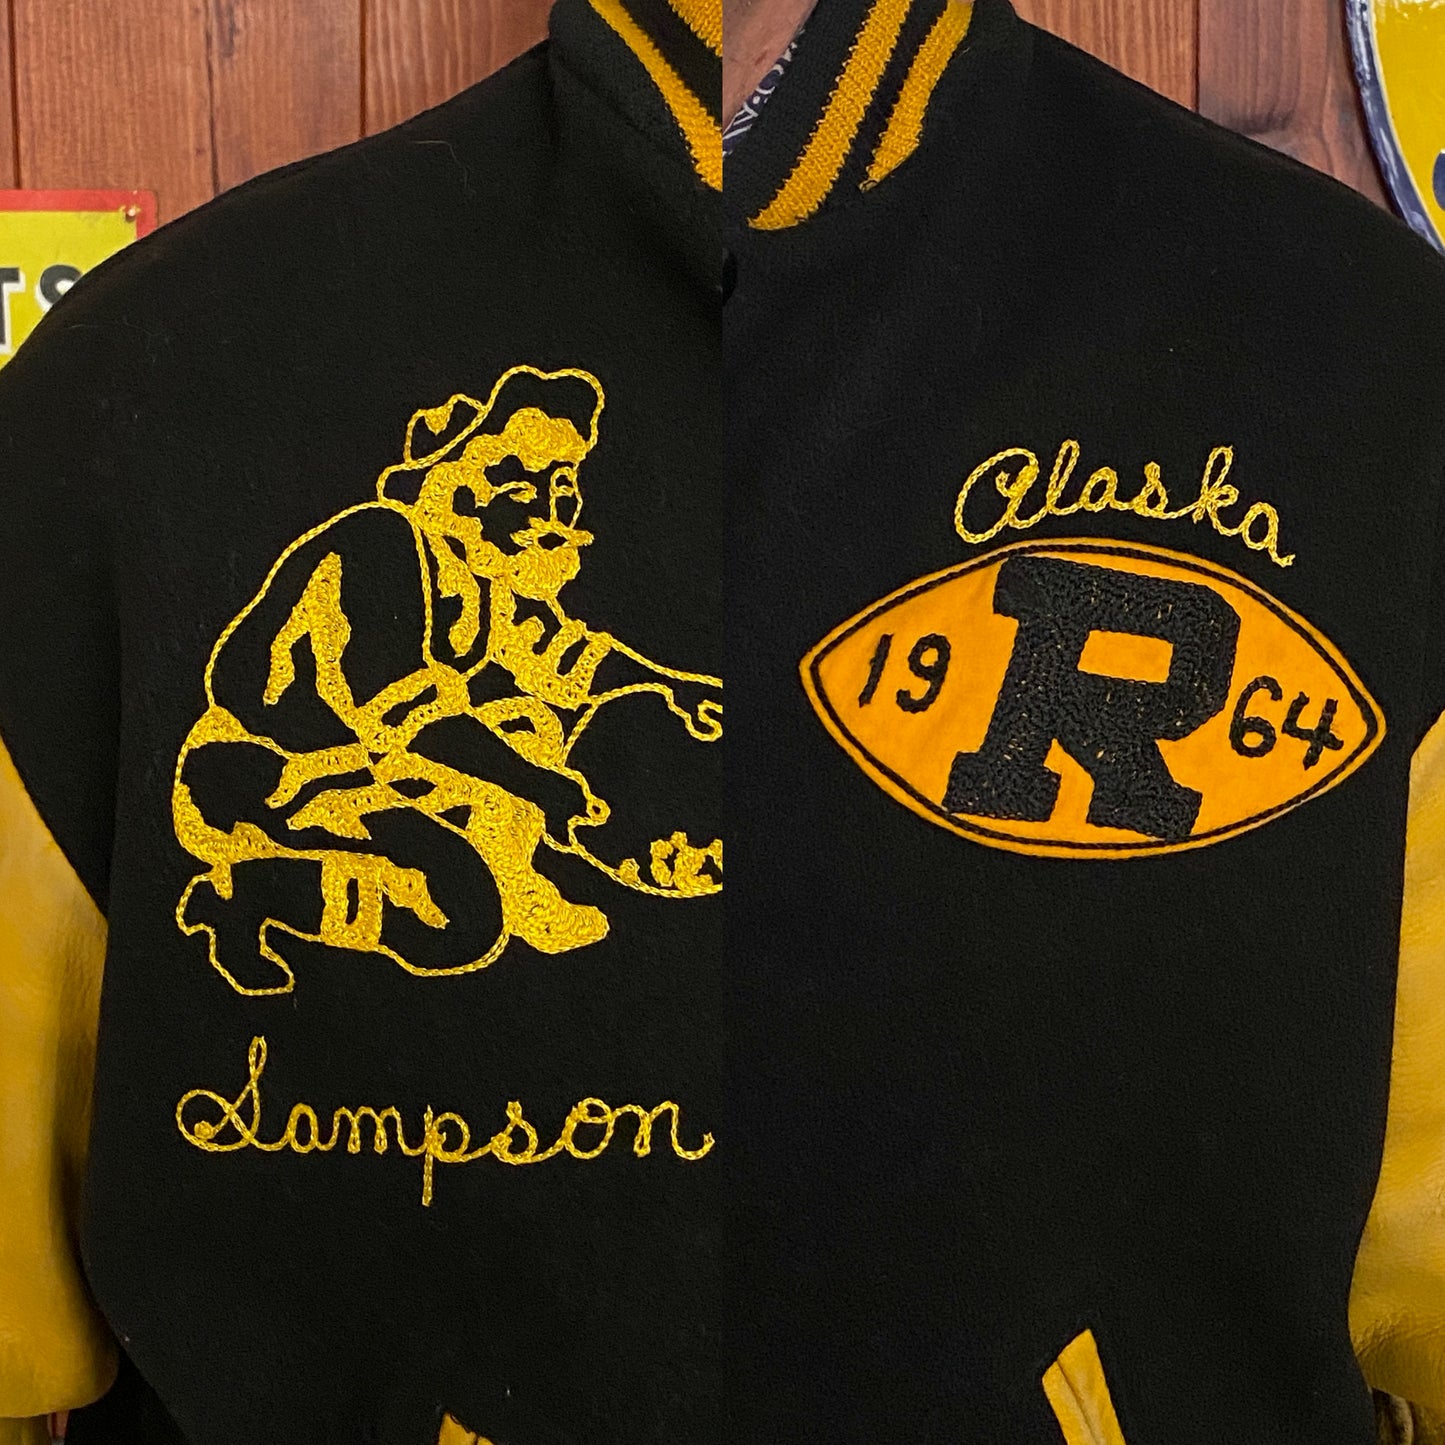 Vintage 1964 varsity jacket from Wainwright, Alaska, size 44 - front view.